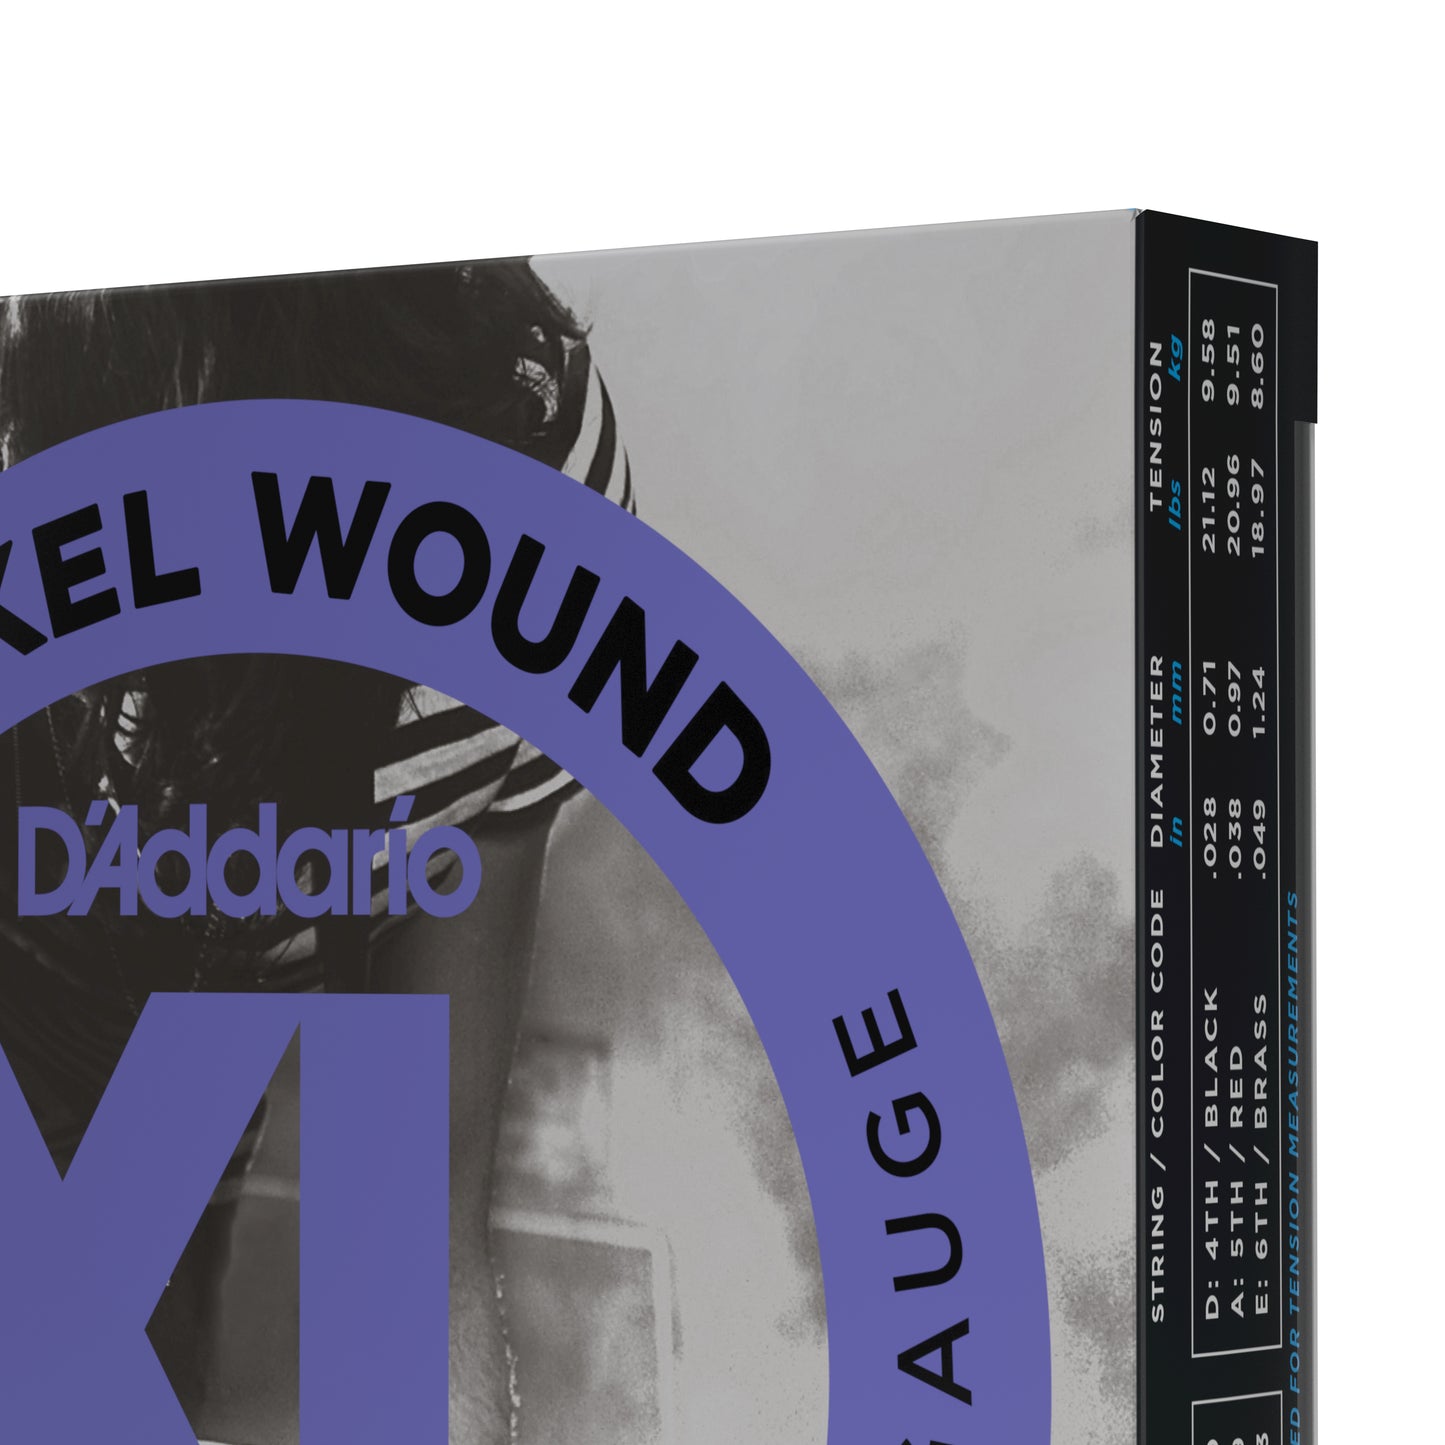 D'Addario EXL115-3D Nickel Wound Electric Guitar Strings, 3 Sets, Medium/Blues-Jazz Rock, 11-49, 3 Sets